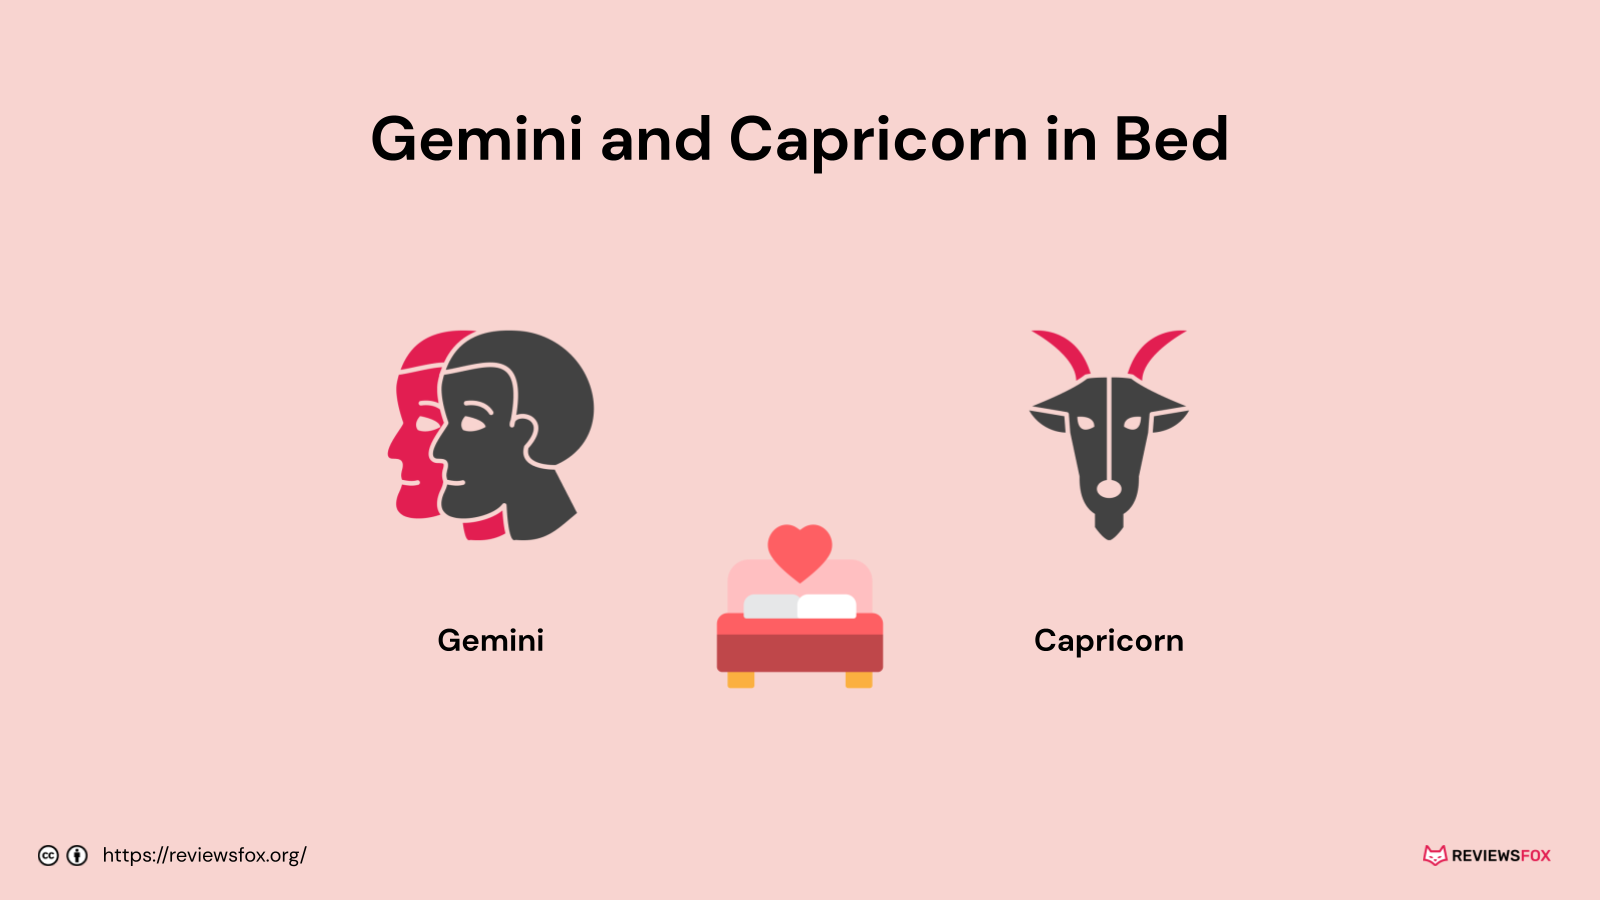 Gemini and Capricorn in bed